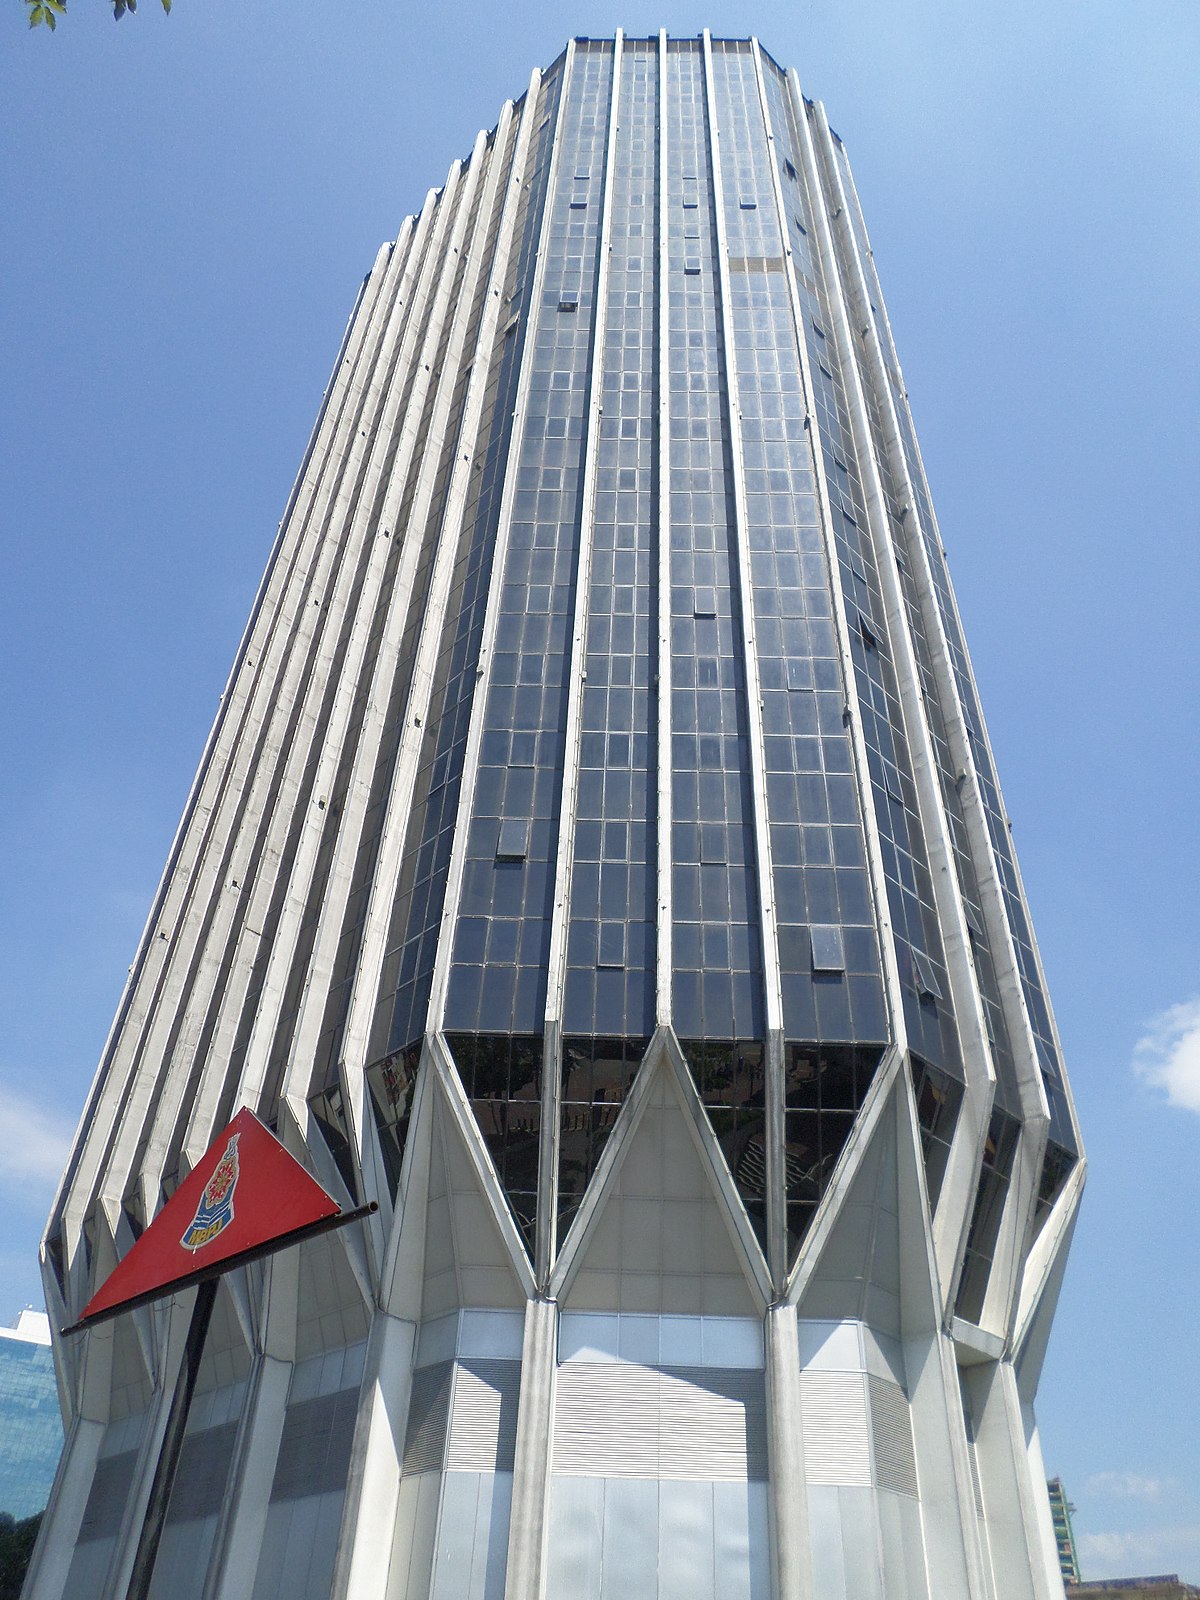 MBPJ Tower - Wikipedia